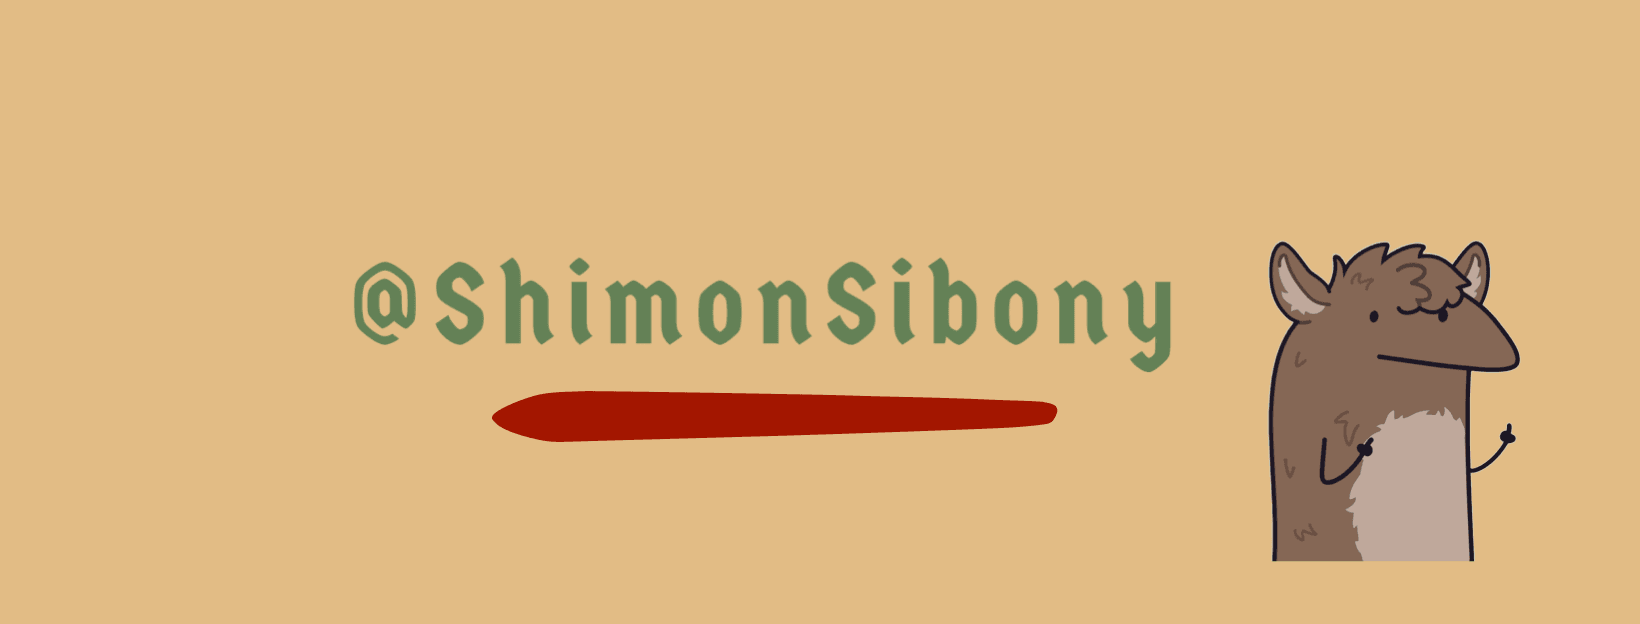 shimonsibony banner